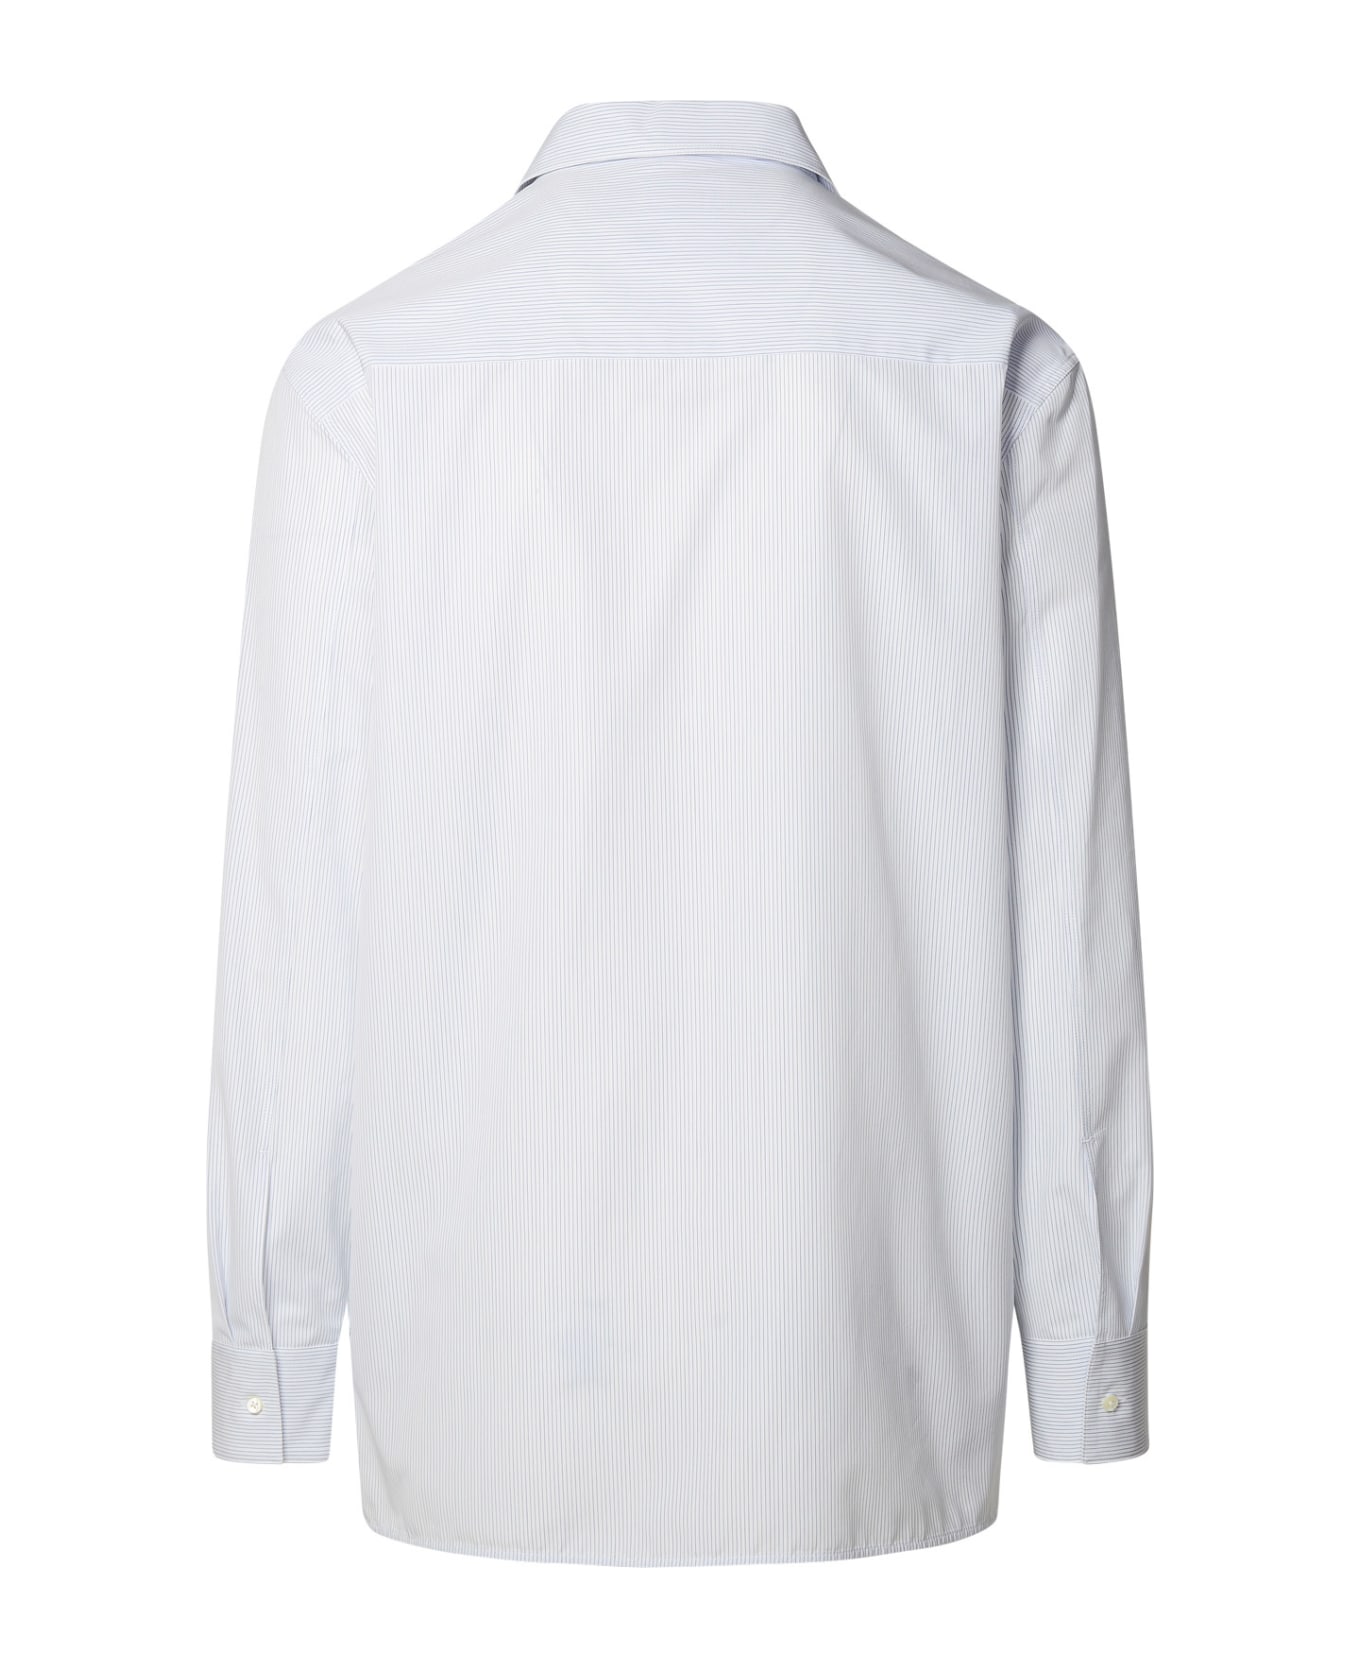 Jil Sander 'tuesday' White Cotton Shirt - White